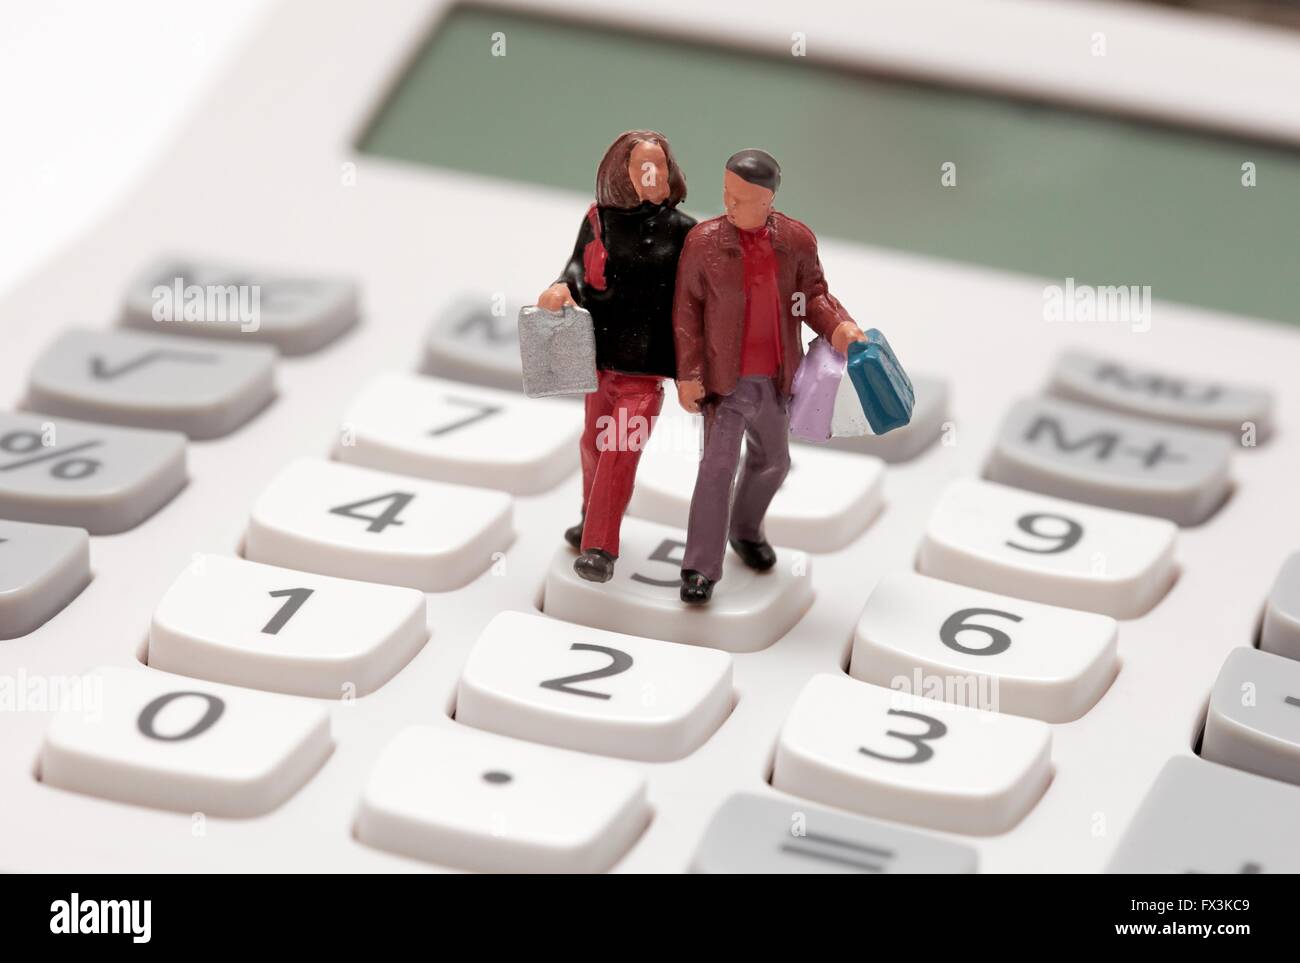 Miniature figurine shoppers carrying bags across a calculator key pad. Stock Photo